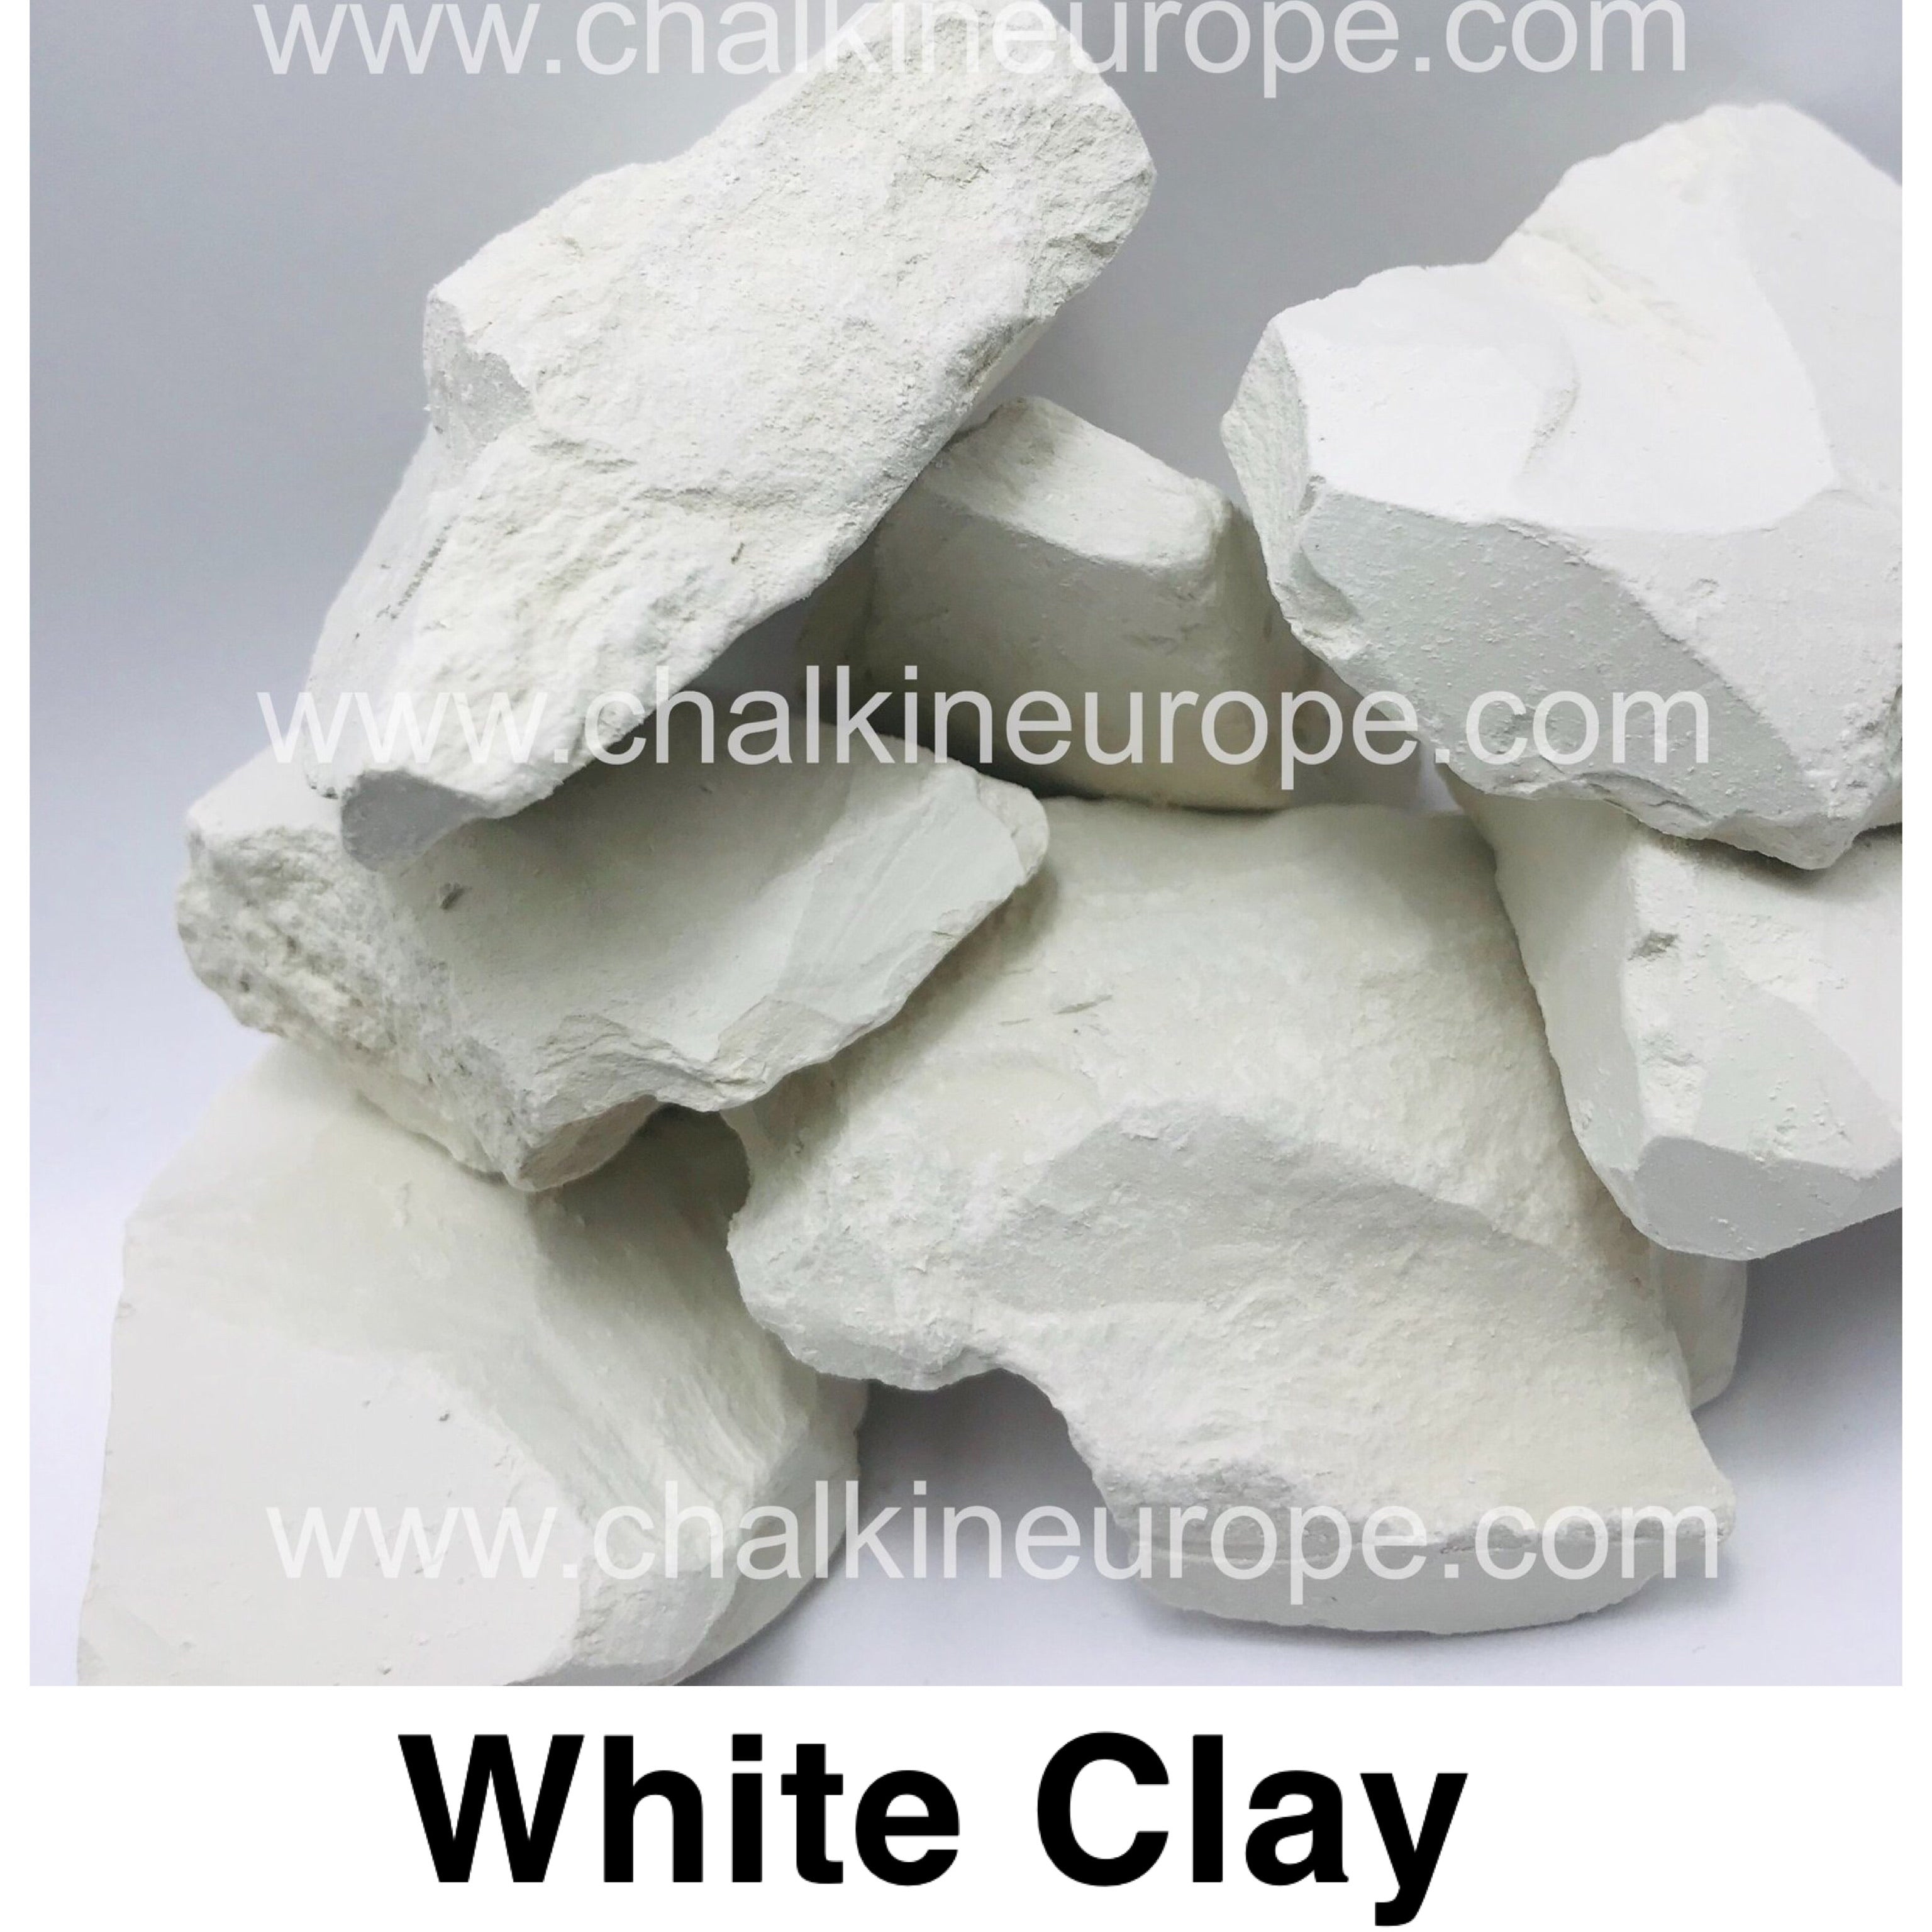 Arcilla blanca comestible - Chalkineurope